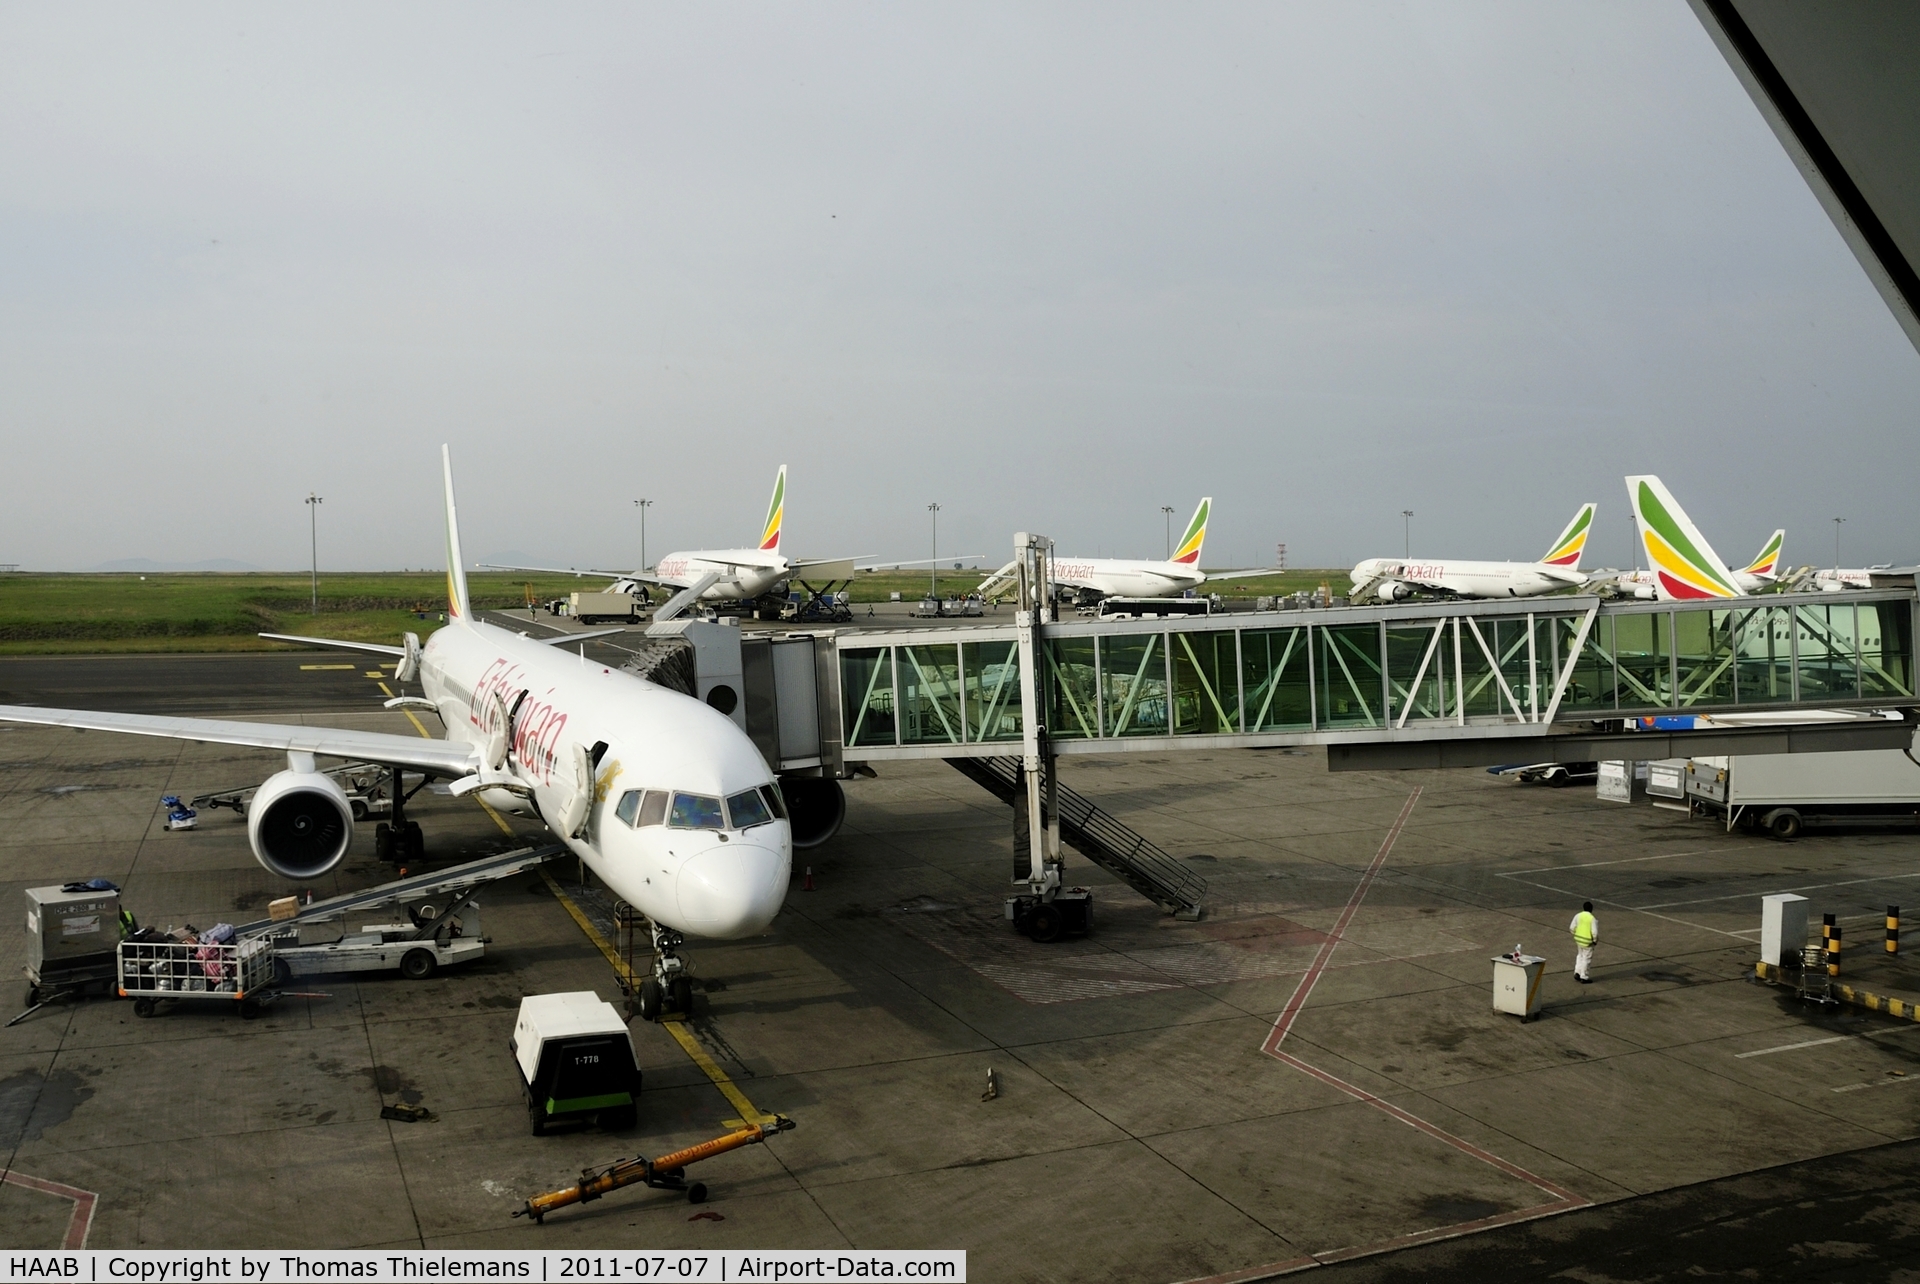 Bole International Airport, Addis Ababa Ethiopia (HAAB) - /